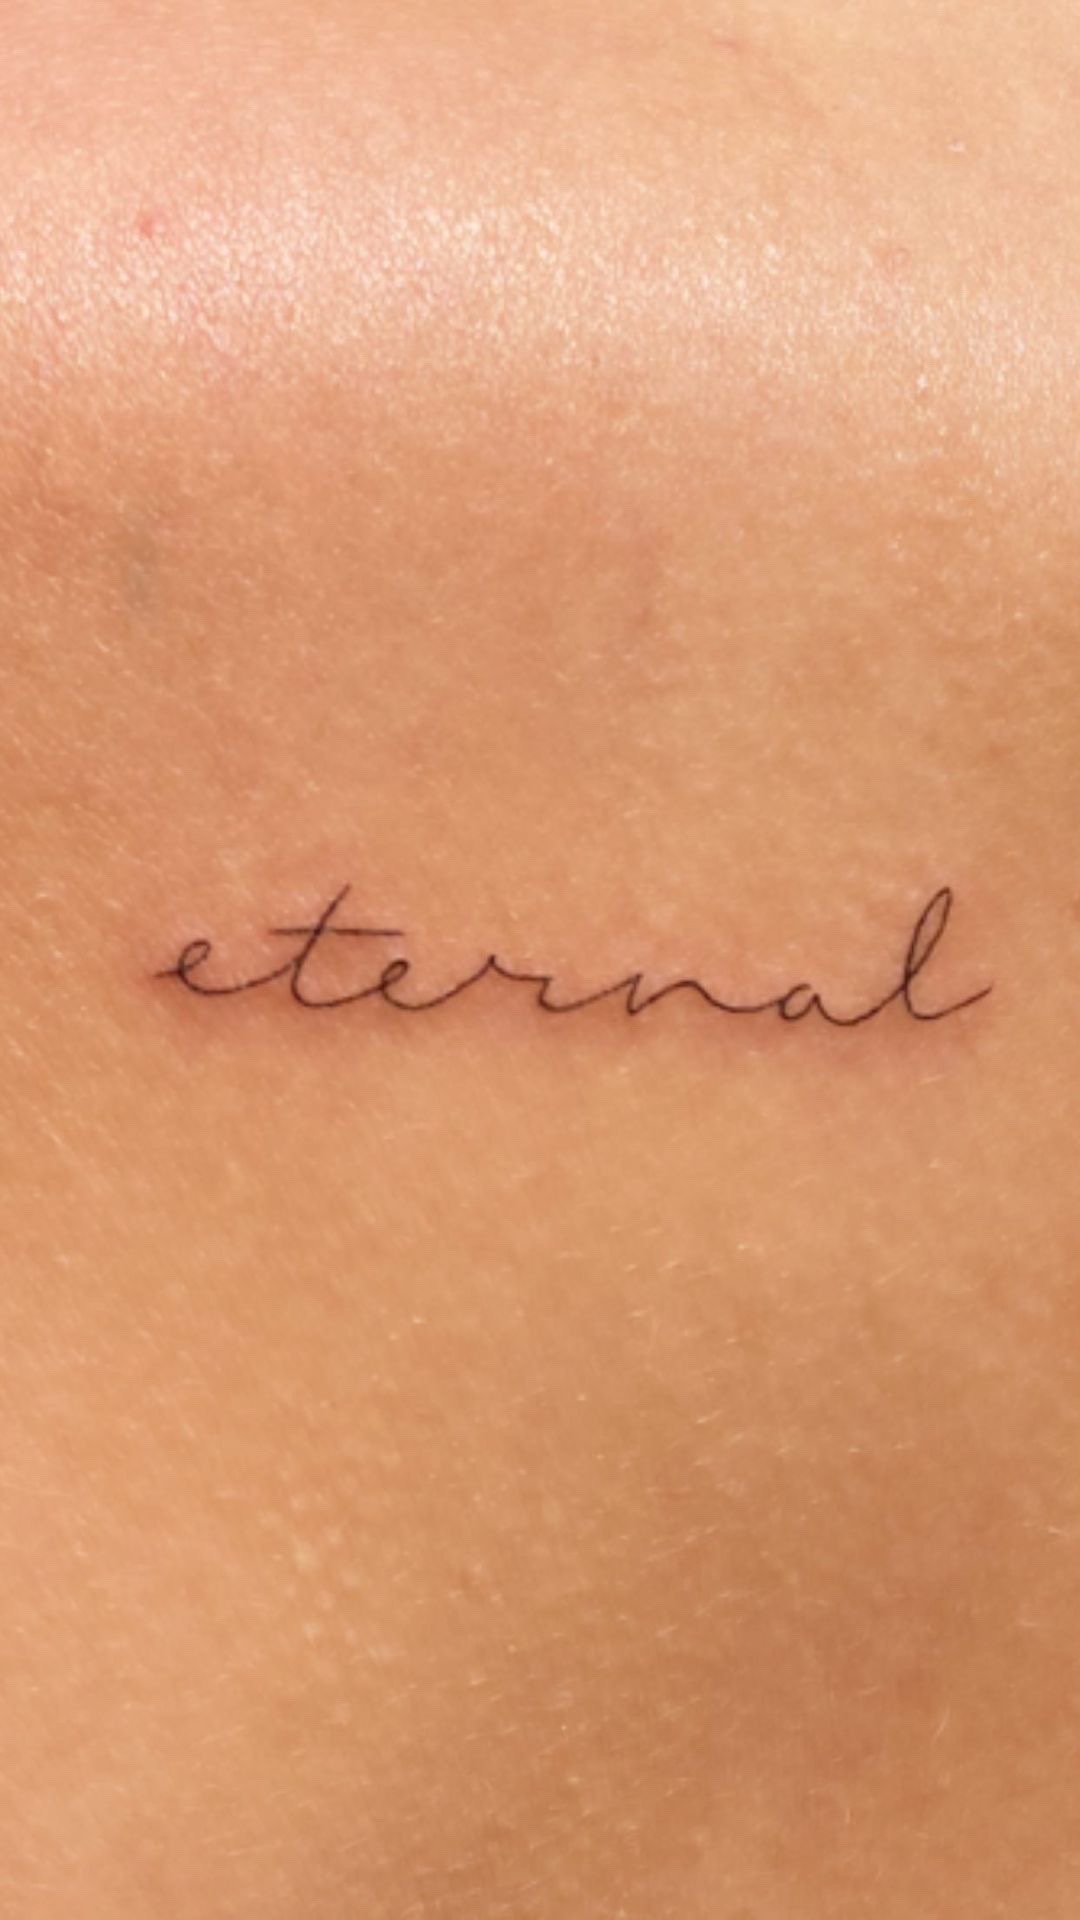 Eternal tattoo  Eternal tattoo added a new photo  at